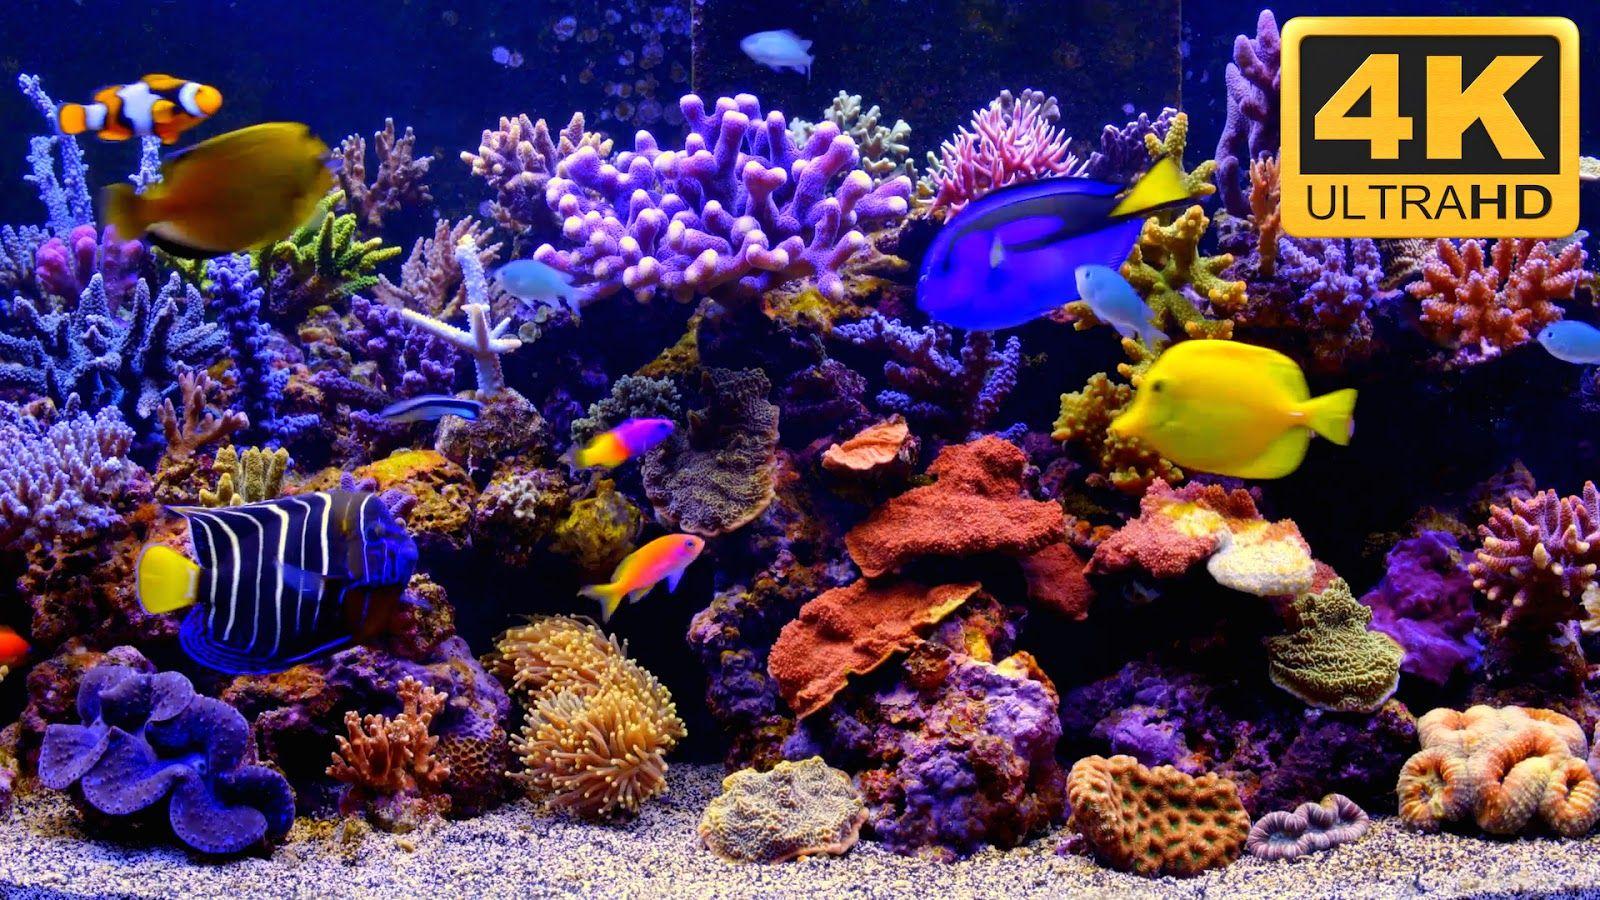 living marine aquarium 2 screensaver download free